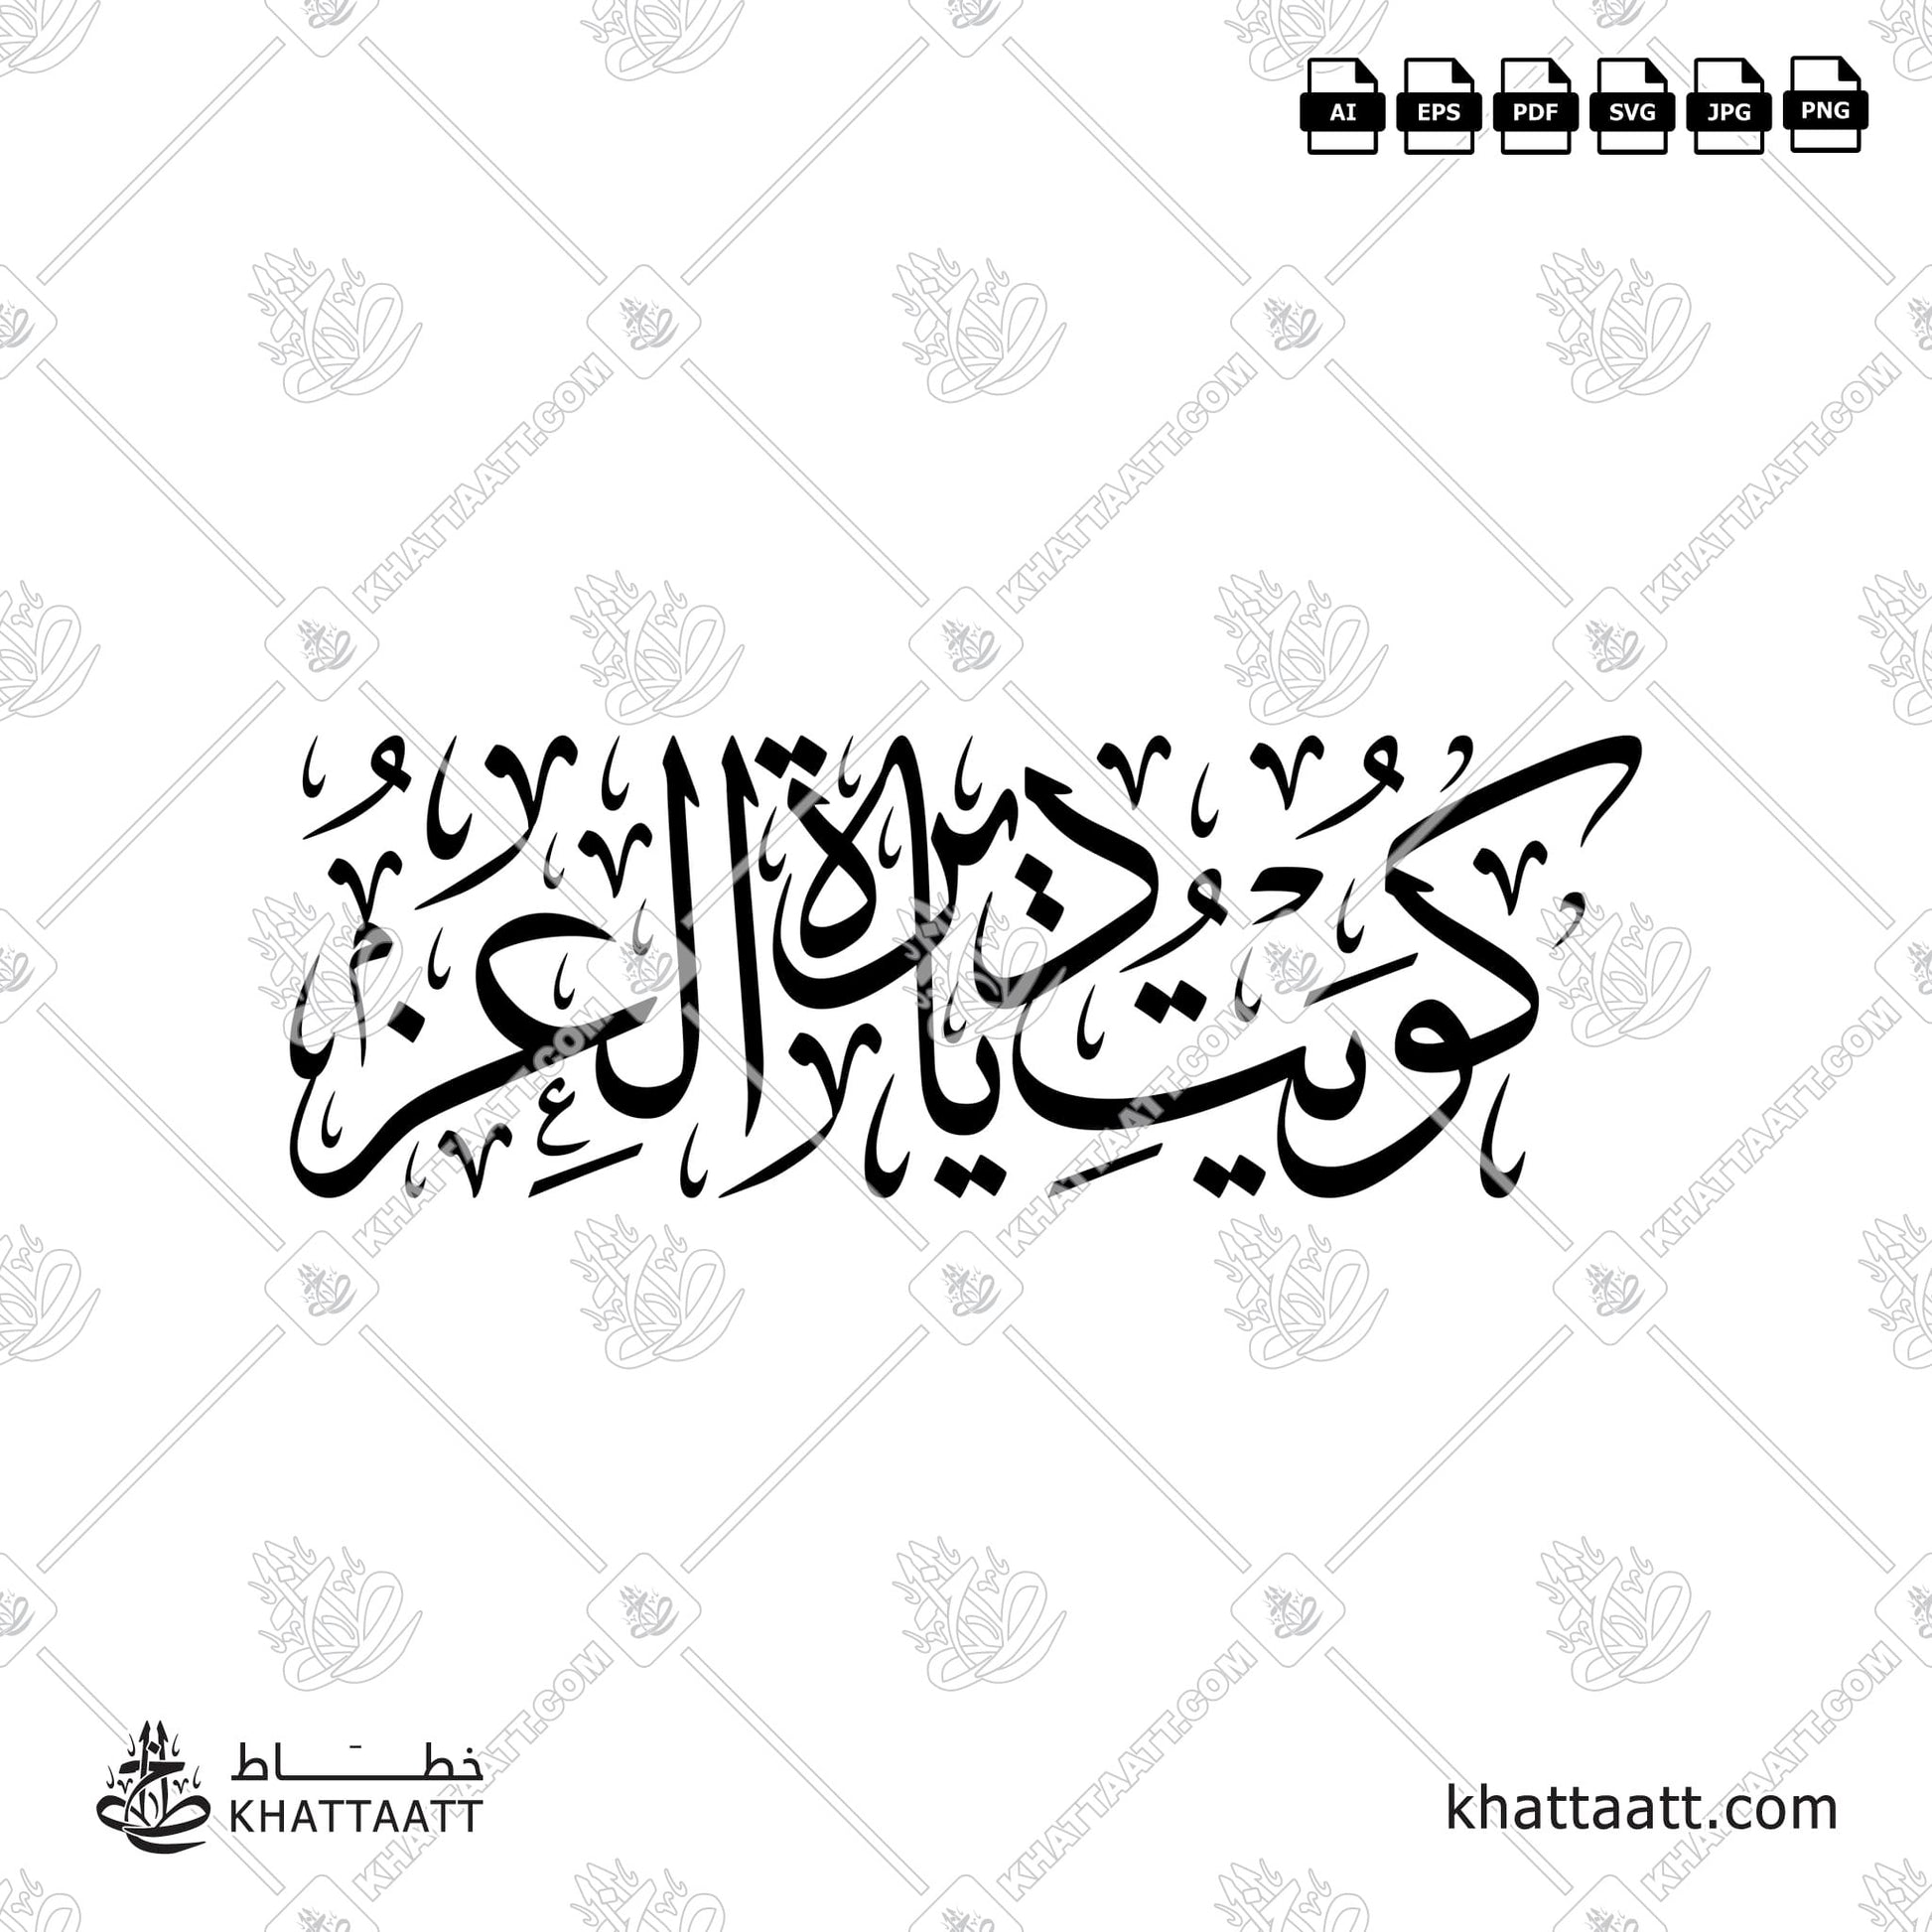 Download Arabic calligraphy تحميل مخطوطة خط عربي of كويت يا ديرة العز (T011) Thuluth - خط الثلث in vector فيكتور and png